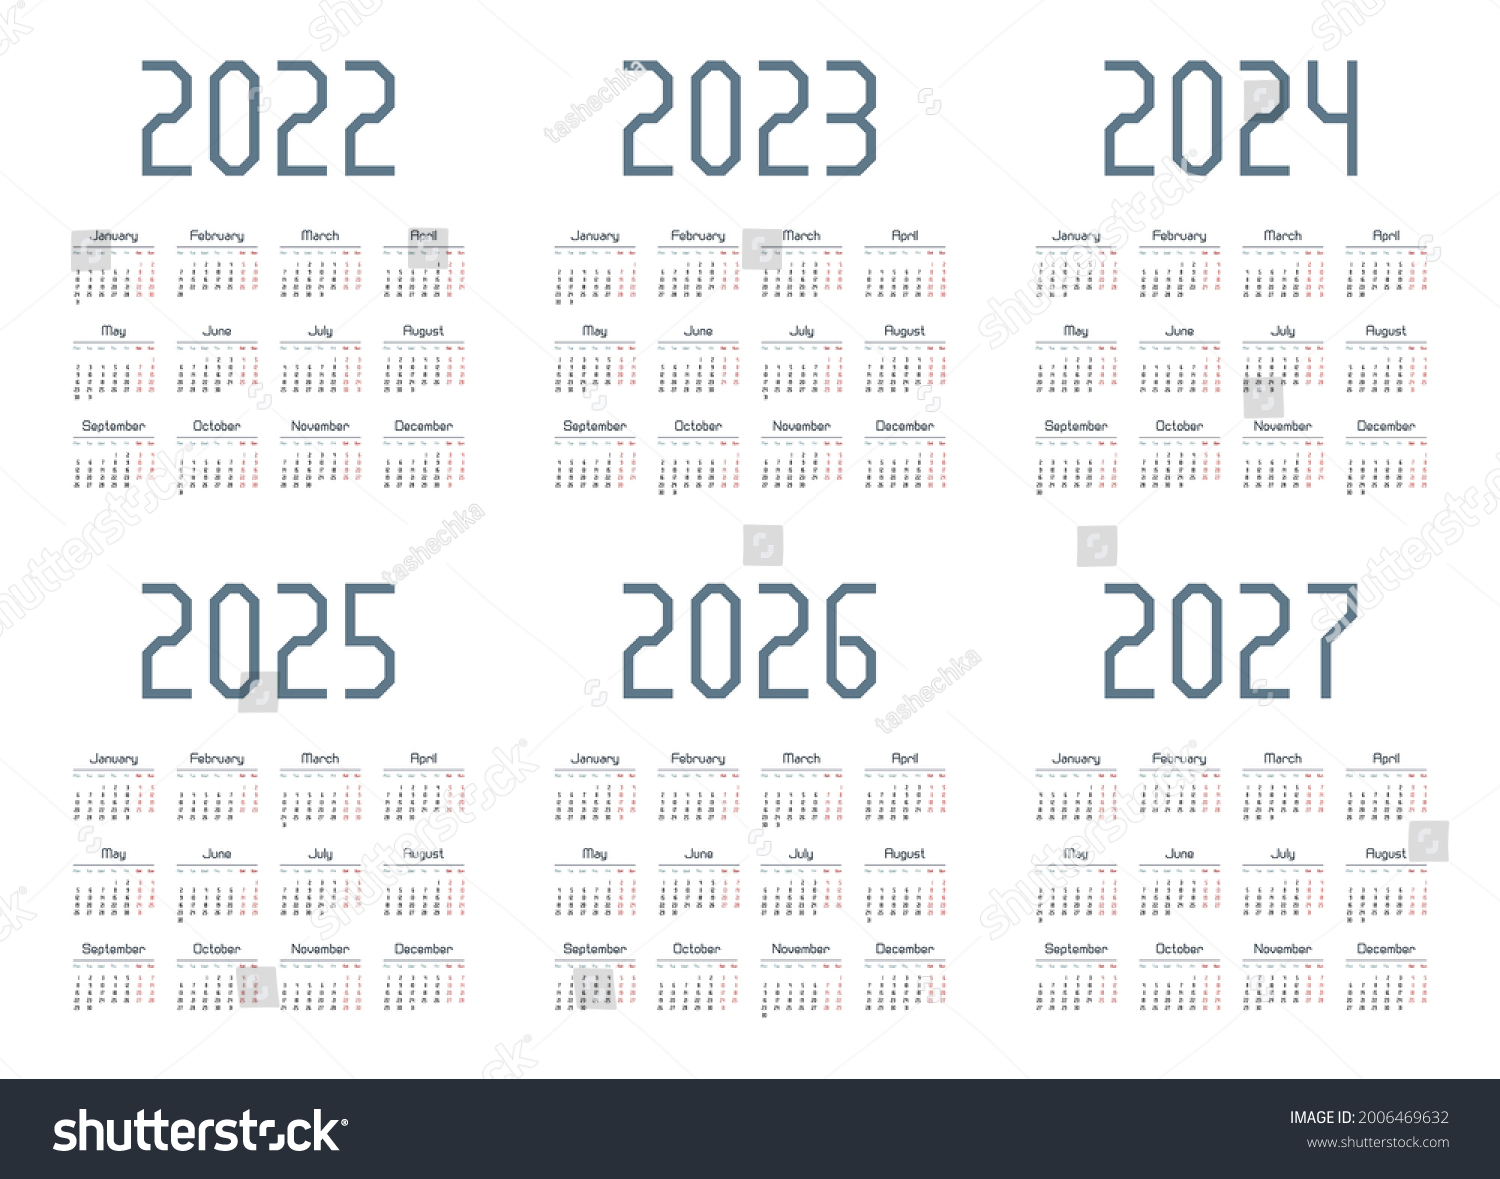 Simple English Calendar 2022 2023 2024 Stock Vector (Royalty Free ...